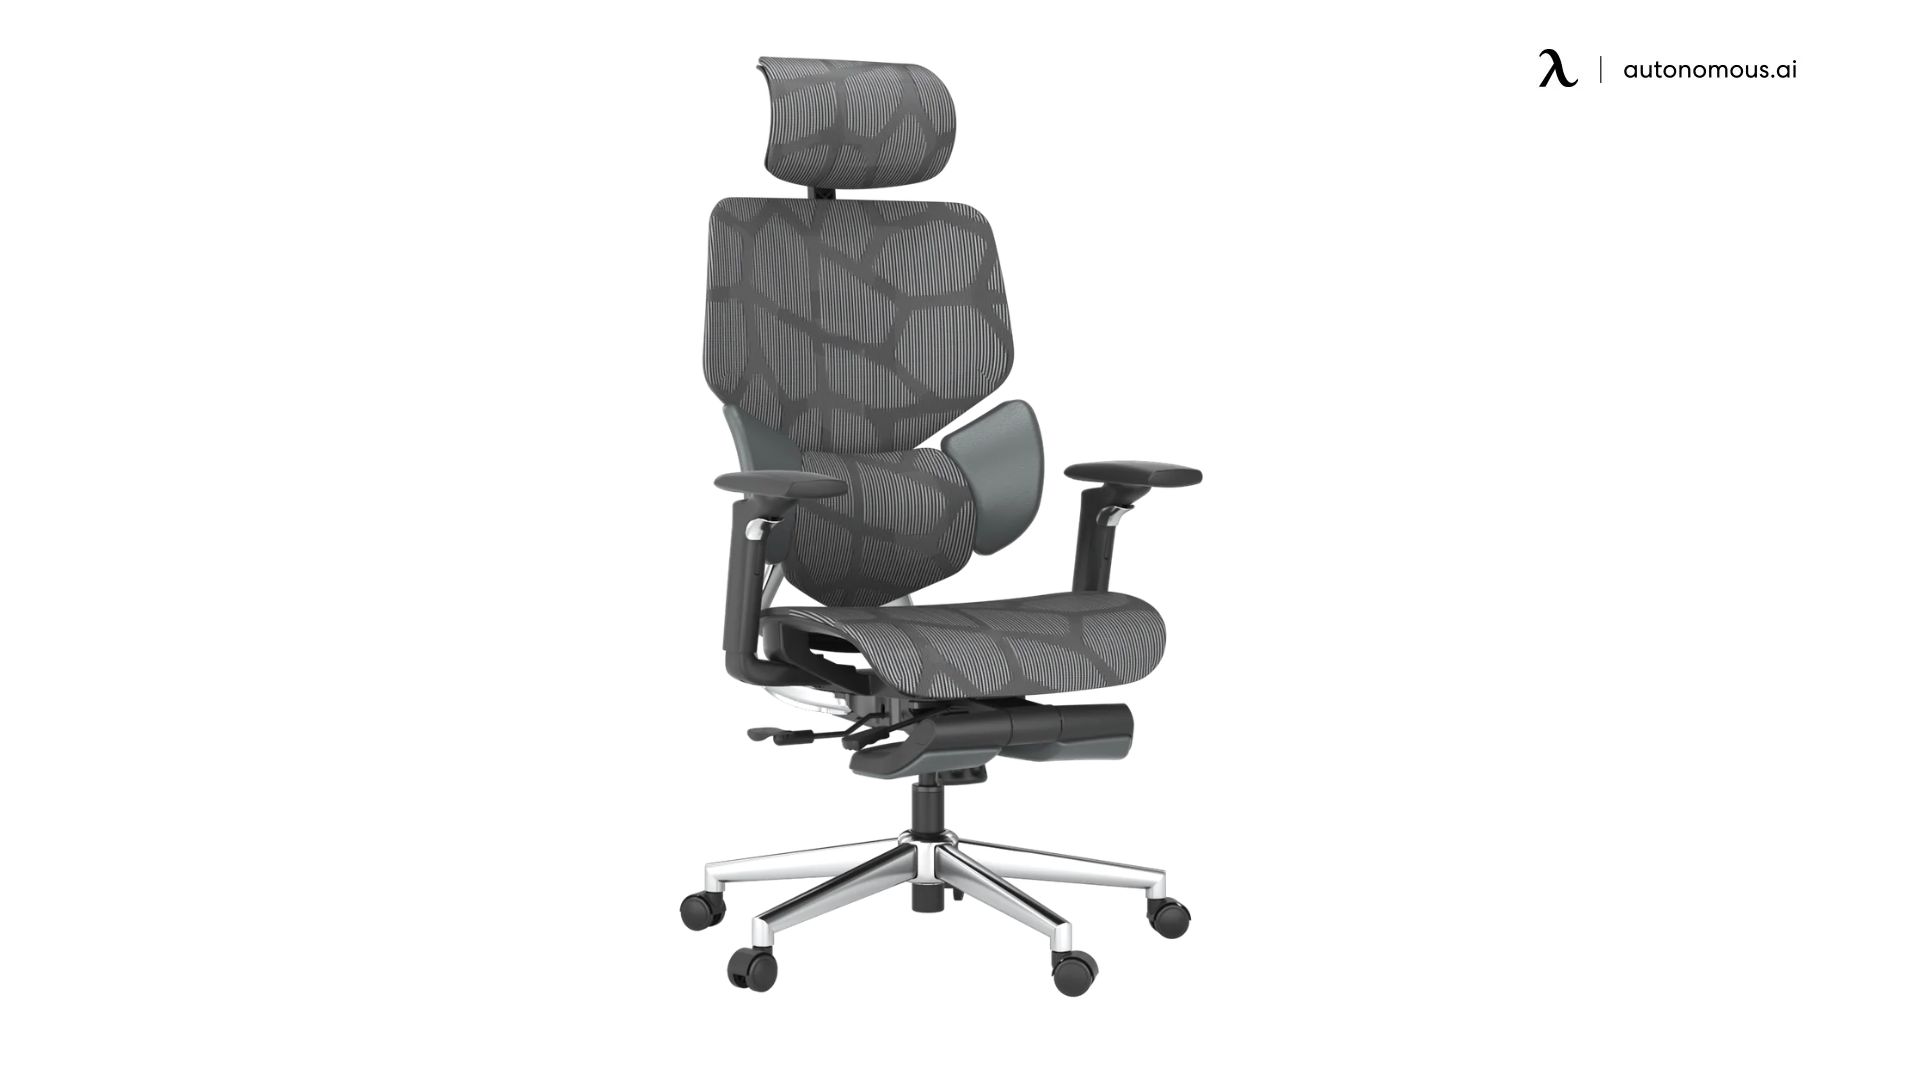 HBADA E3 Ergonomic Chair Pro